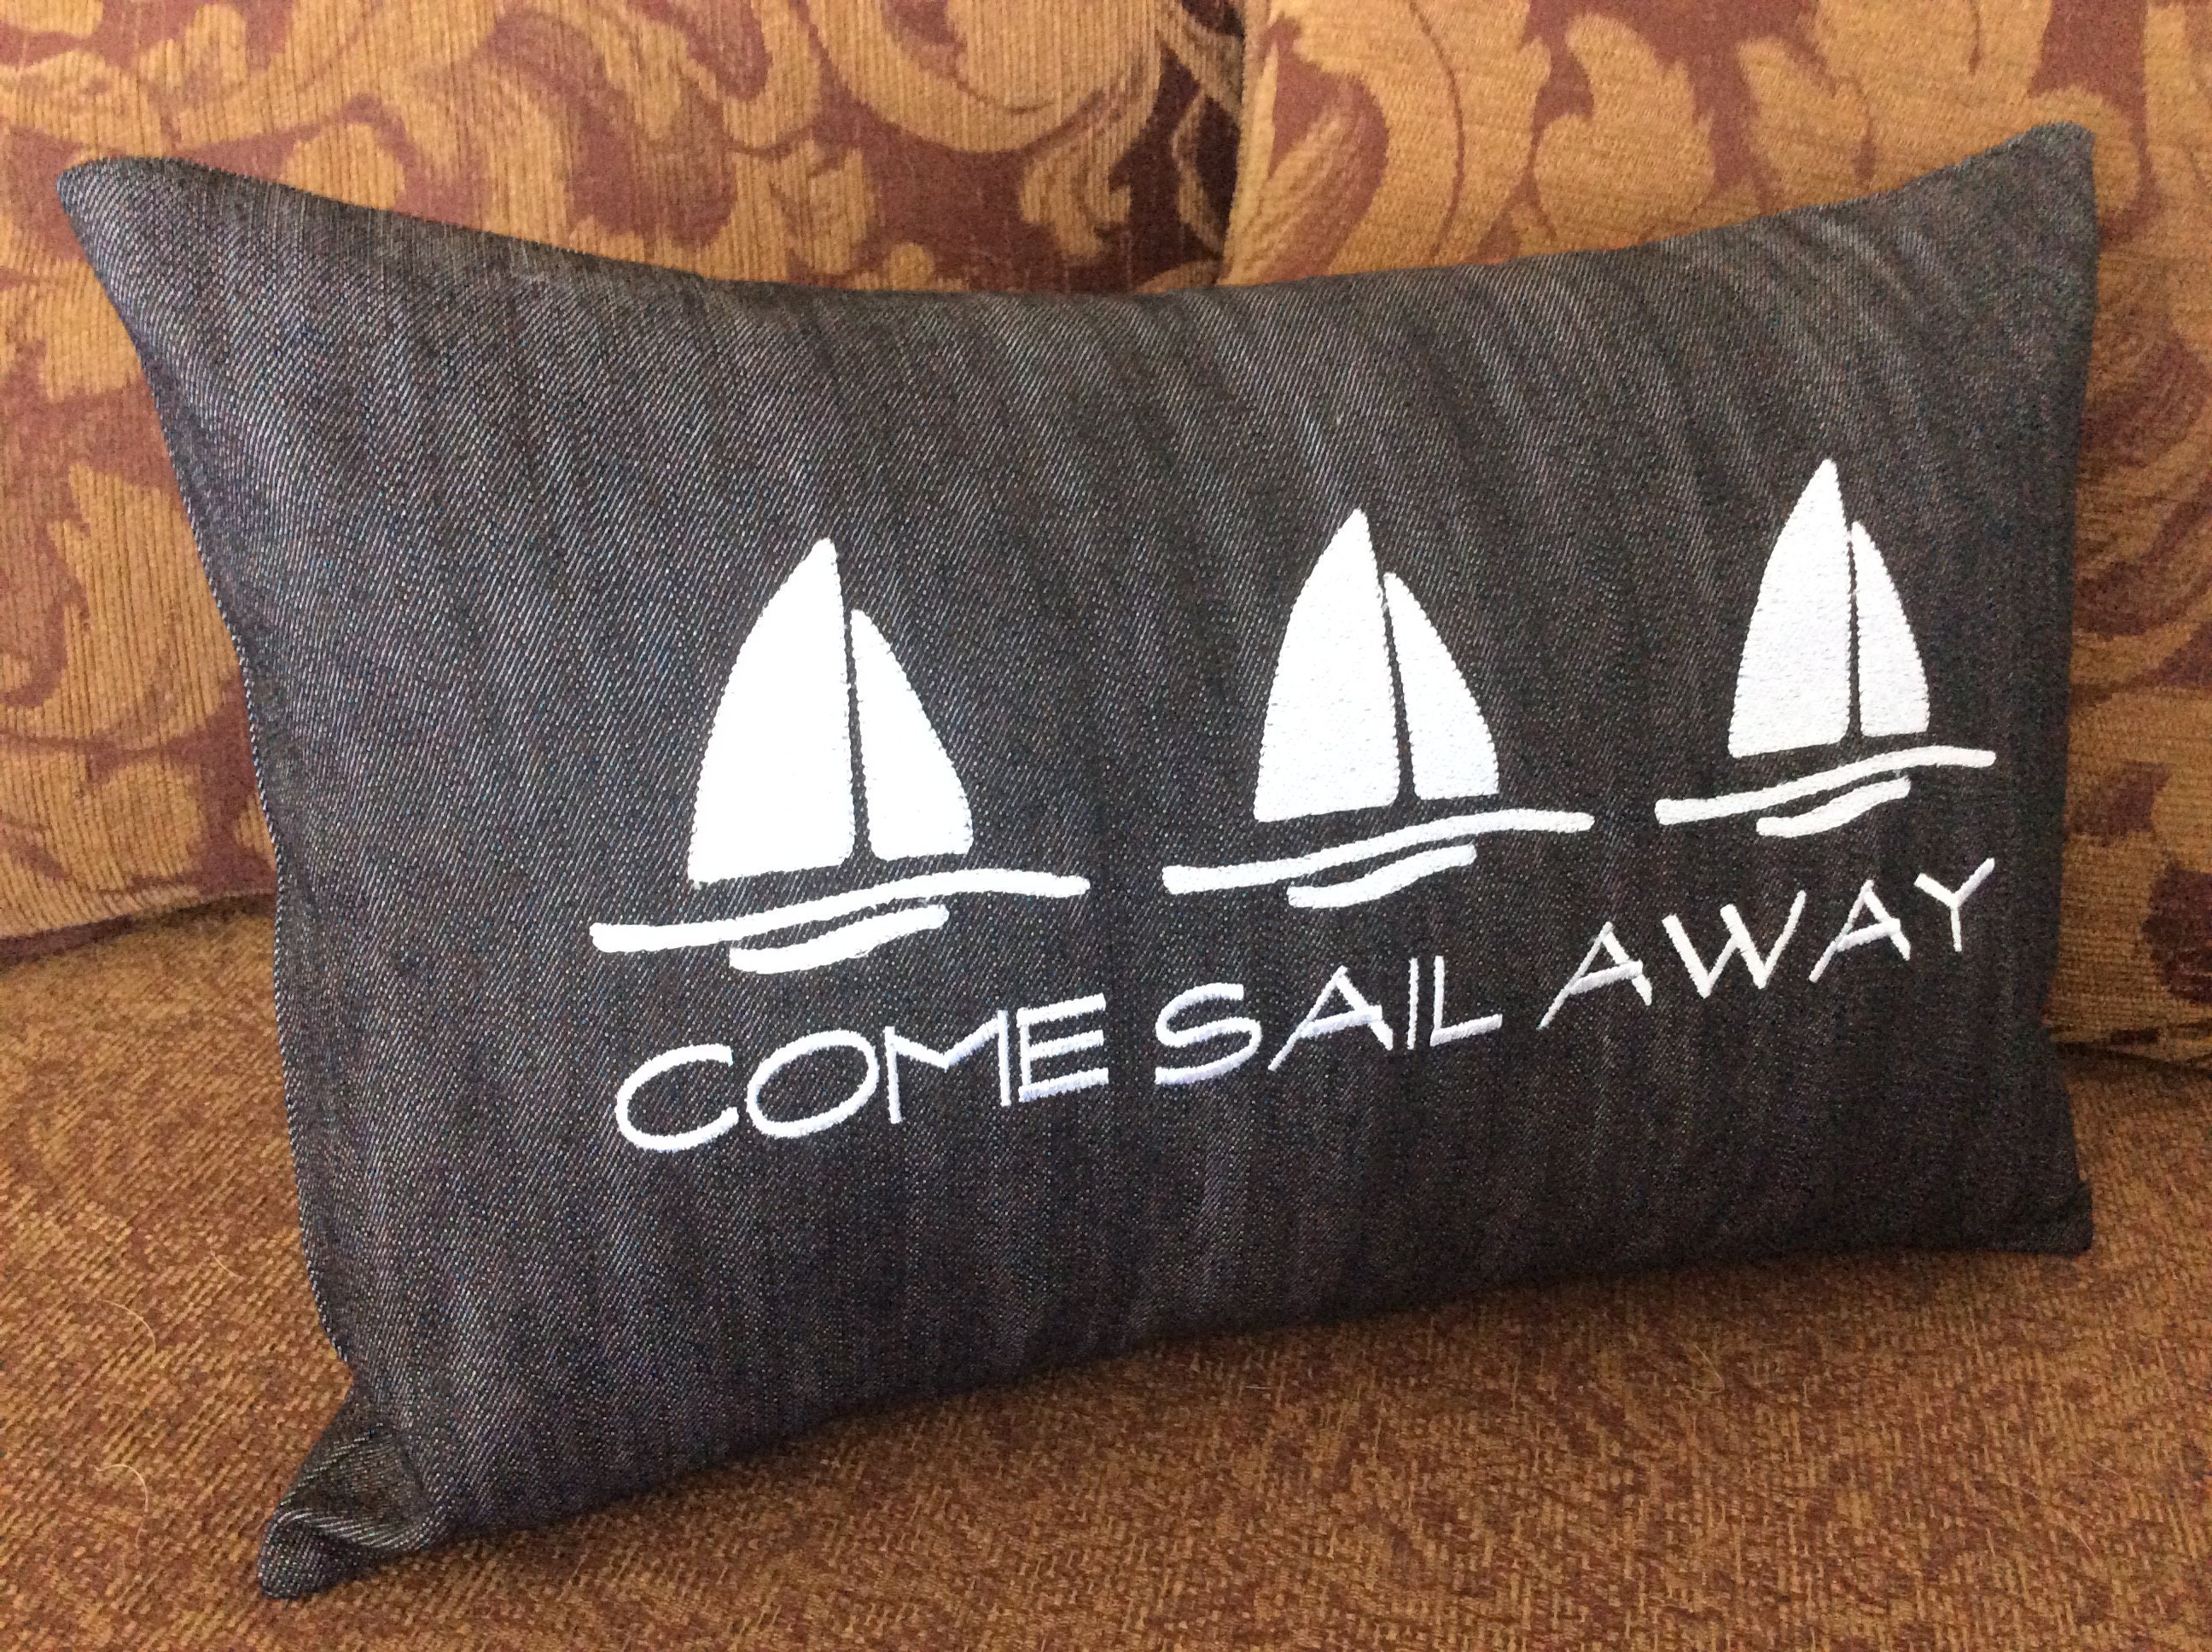 Primitive Coastal Sailboat Outdoor Decorative Pillow - Laural Home